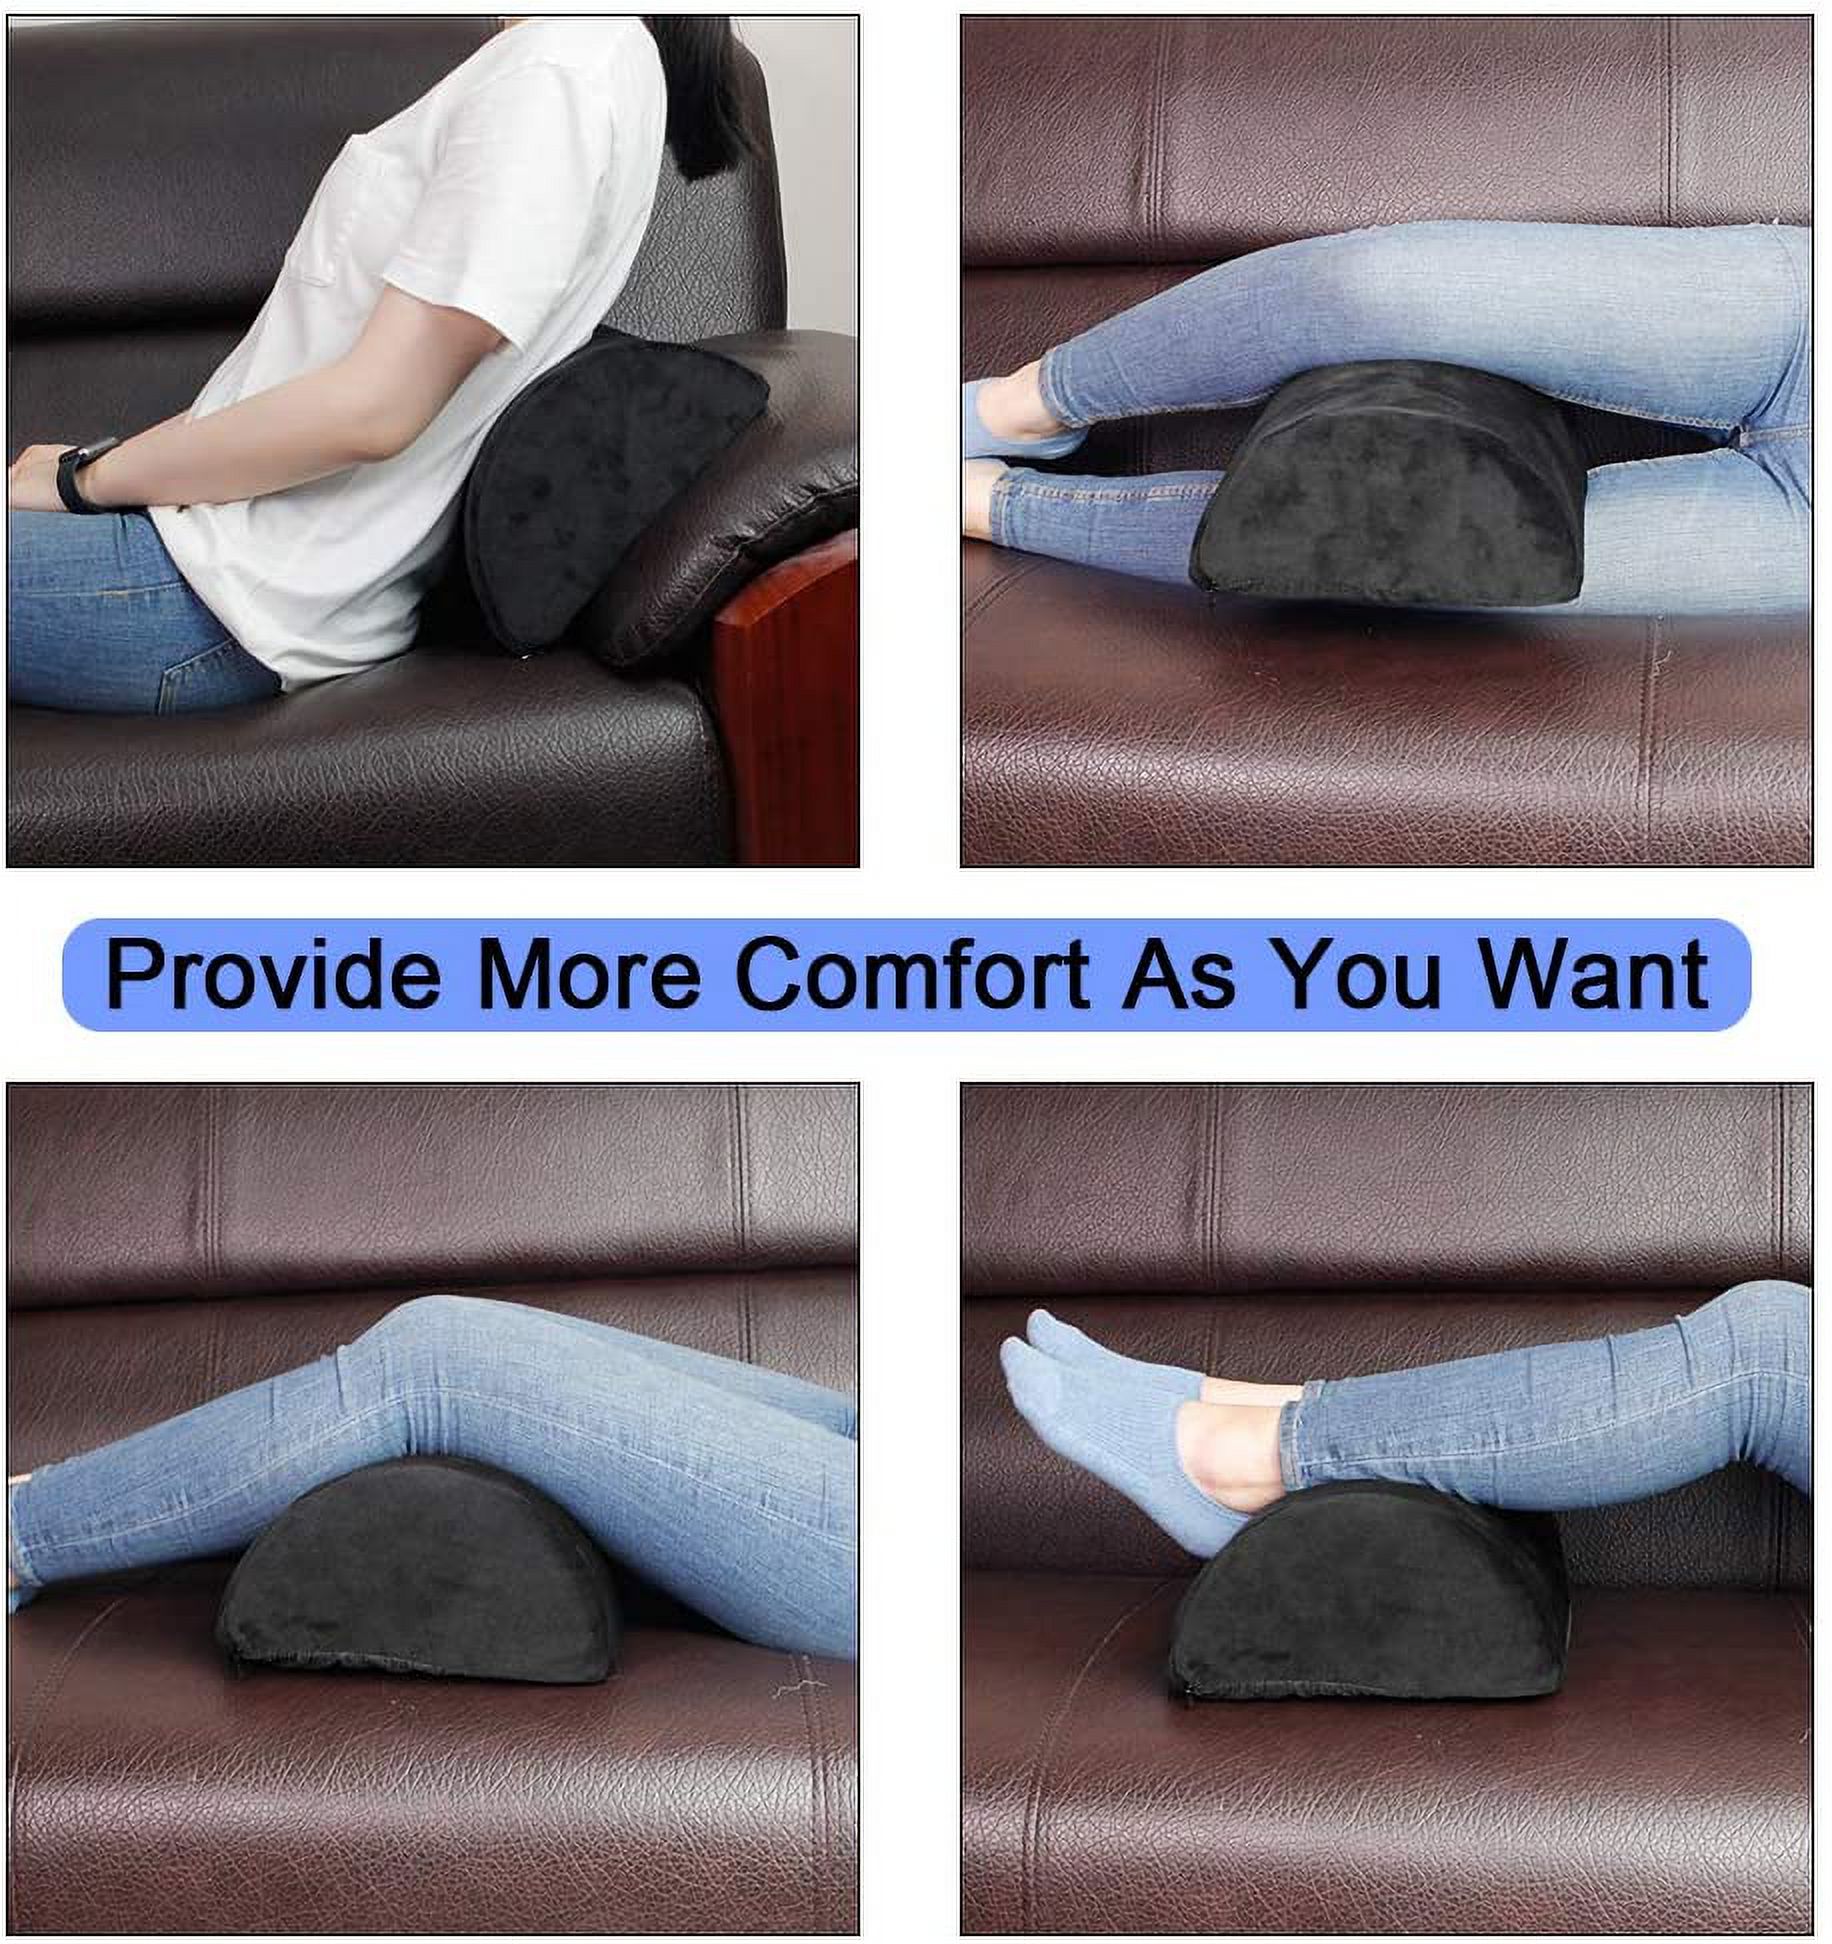 Ergonomic Foot Rest Cushion Under Desk with High Rebound Ergonomic Foam Non-Slip Half-Cylinder Footstool Footrest Ottoman for Home Office Desk Airplane Travel (Black, 2 PCS) - image 4 of 8